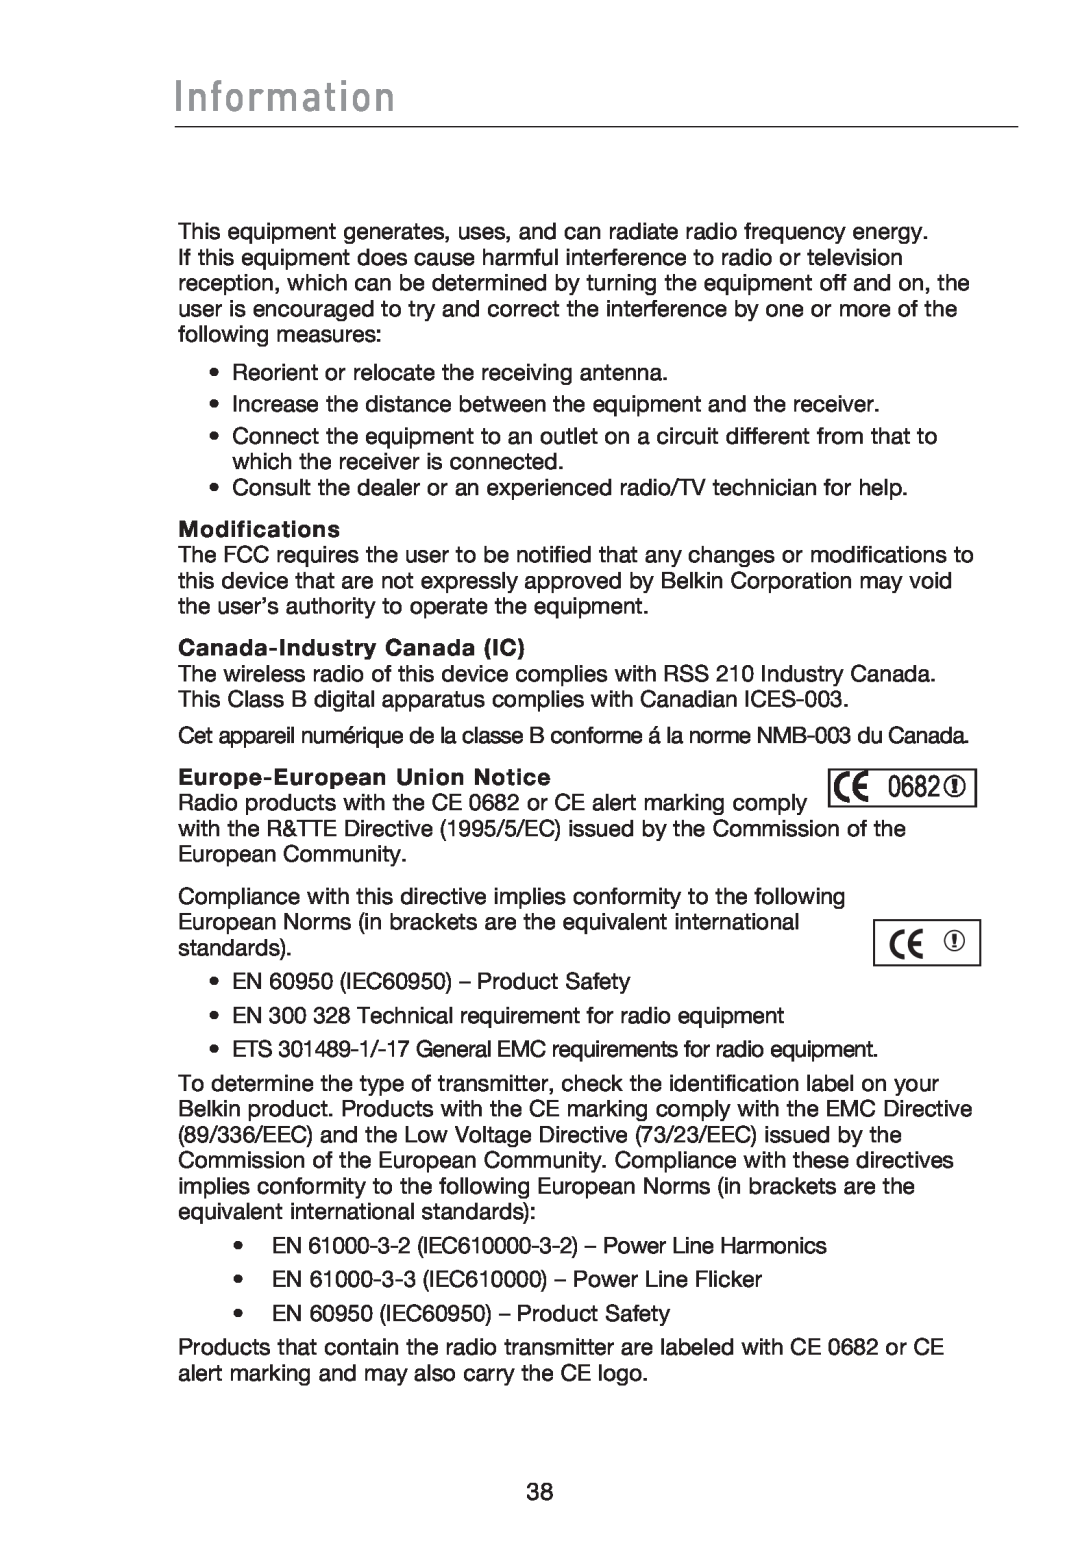 Belkin P74471EA-B manual Information, Modifications, Canada-Industry Canada IC, Europe-European Union Notice 